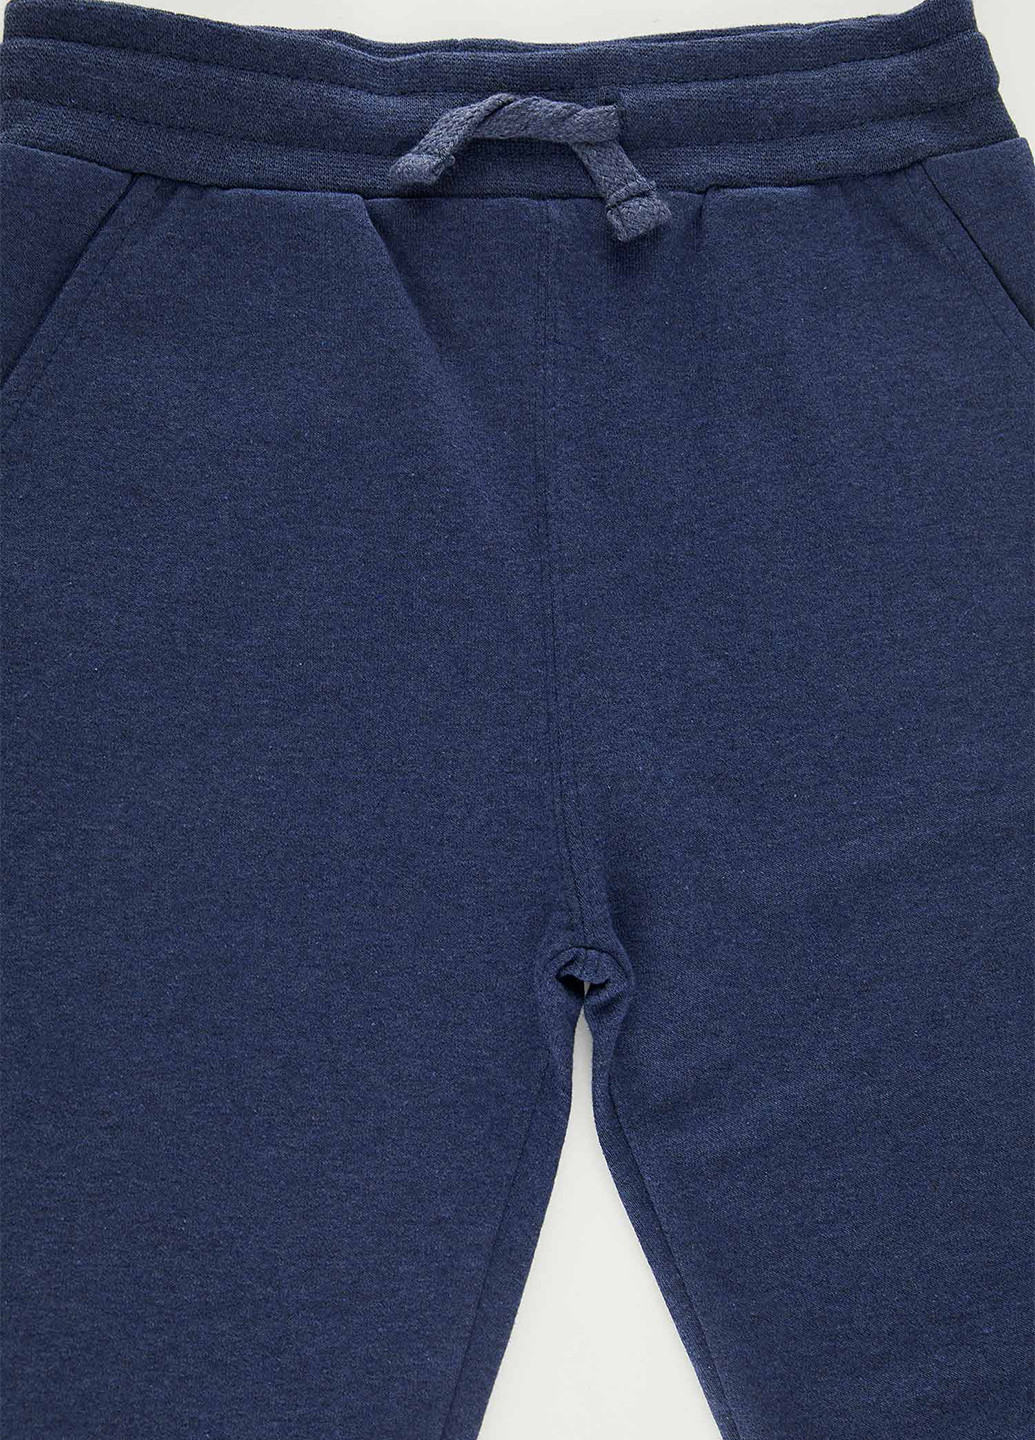 Костюм(худи, брюки) DeFacto брючный серо-синий спортивный полиэстер, футер